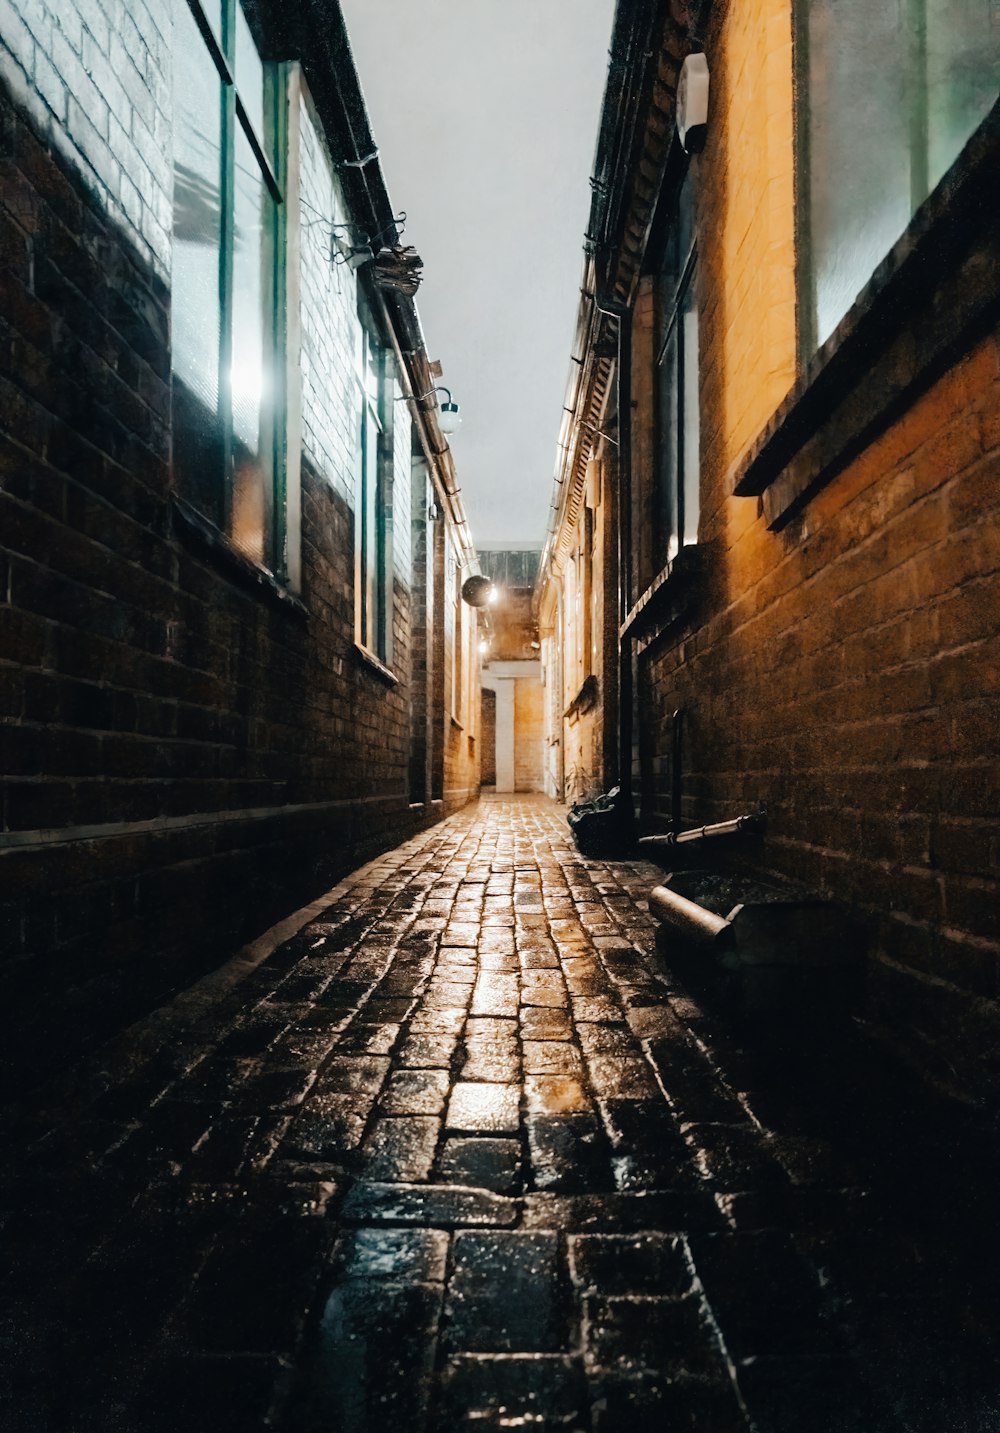 a narrow alley way with brick walls and windows